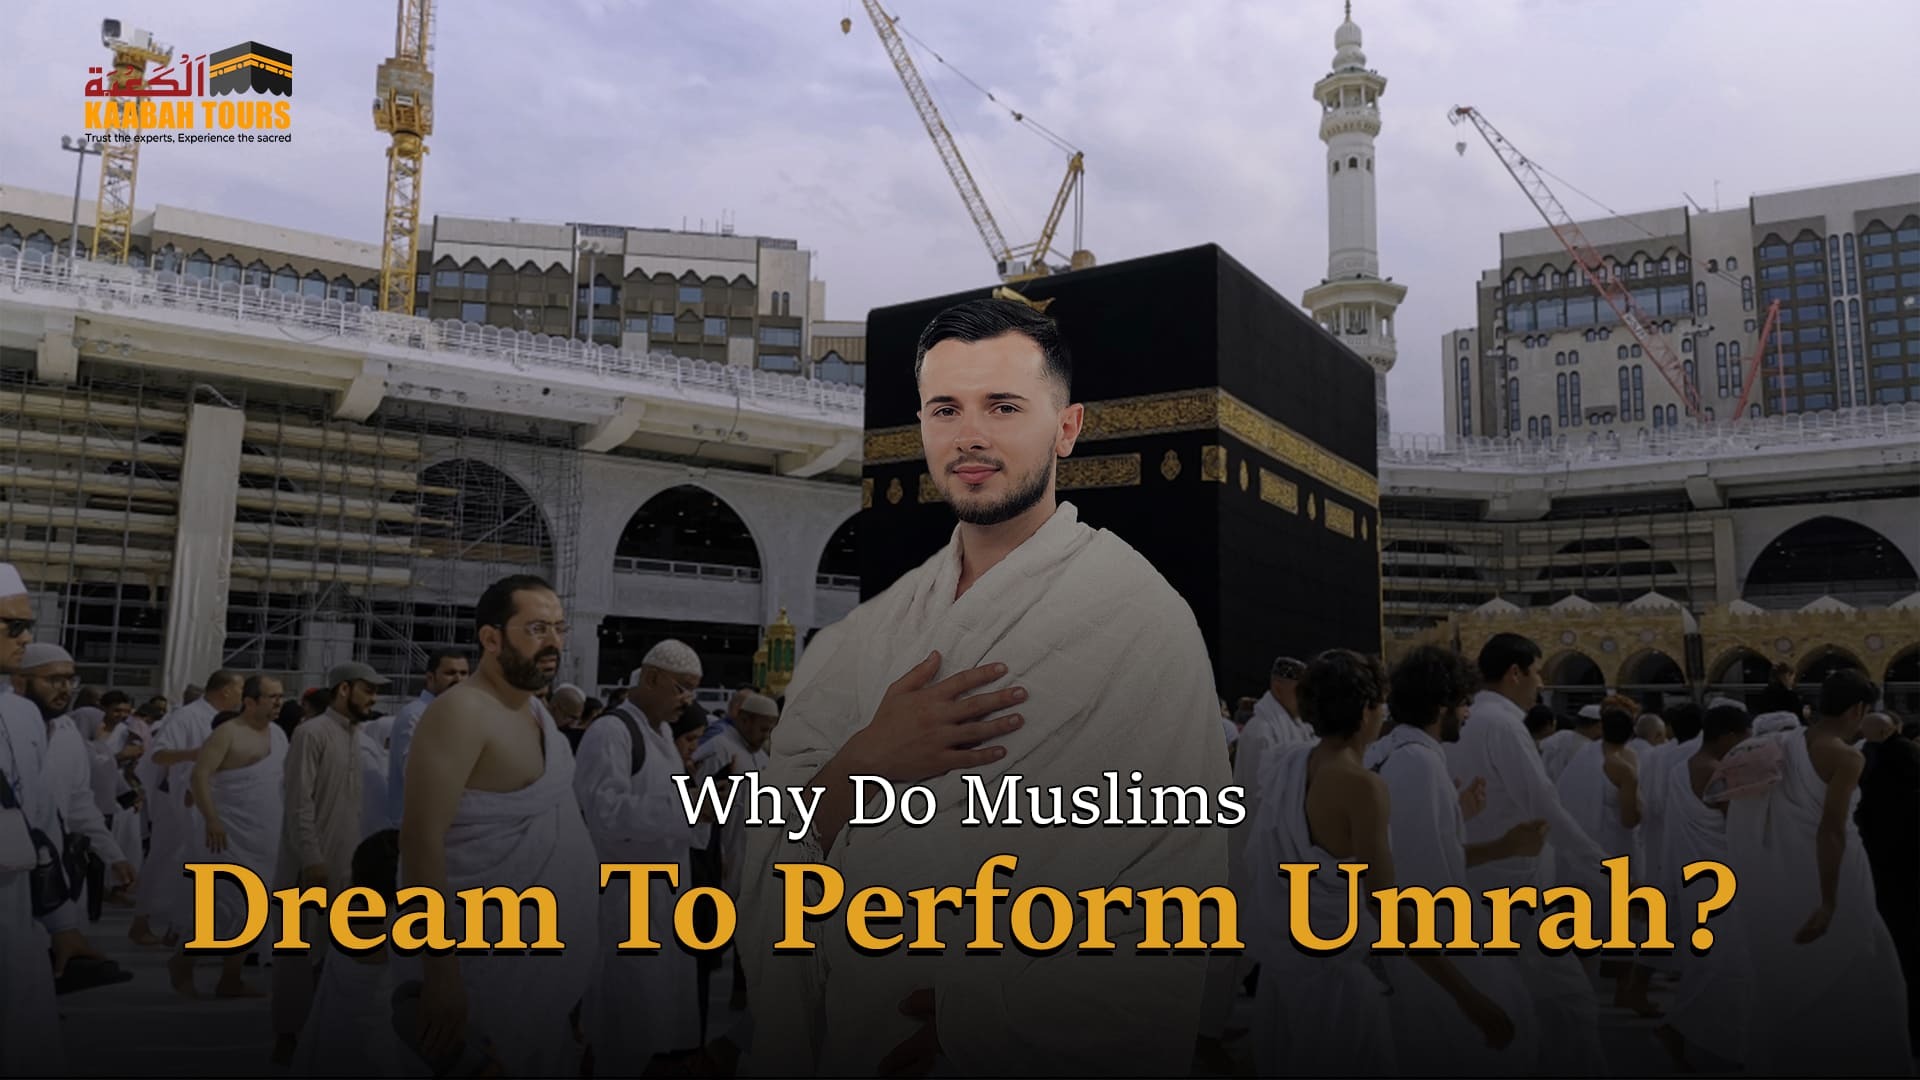 Muslims Dream To Perform Umrah